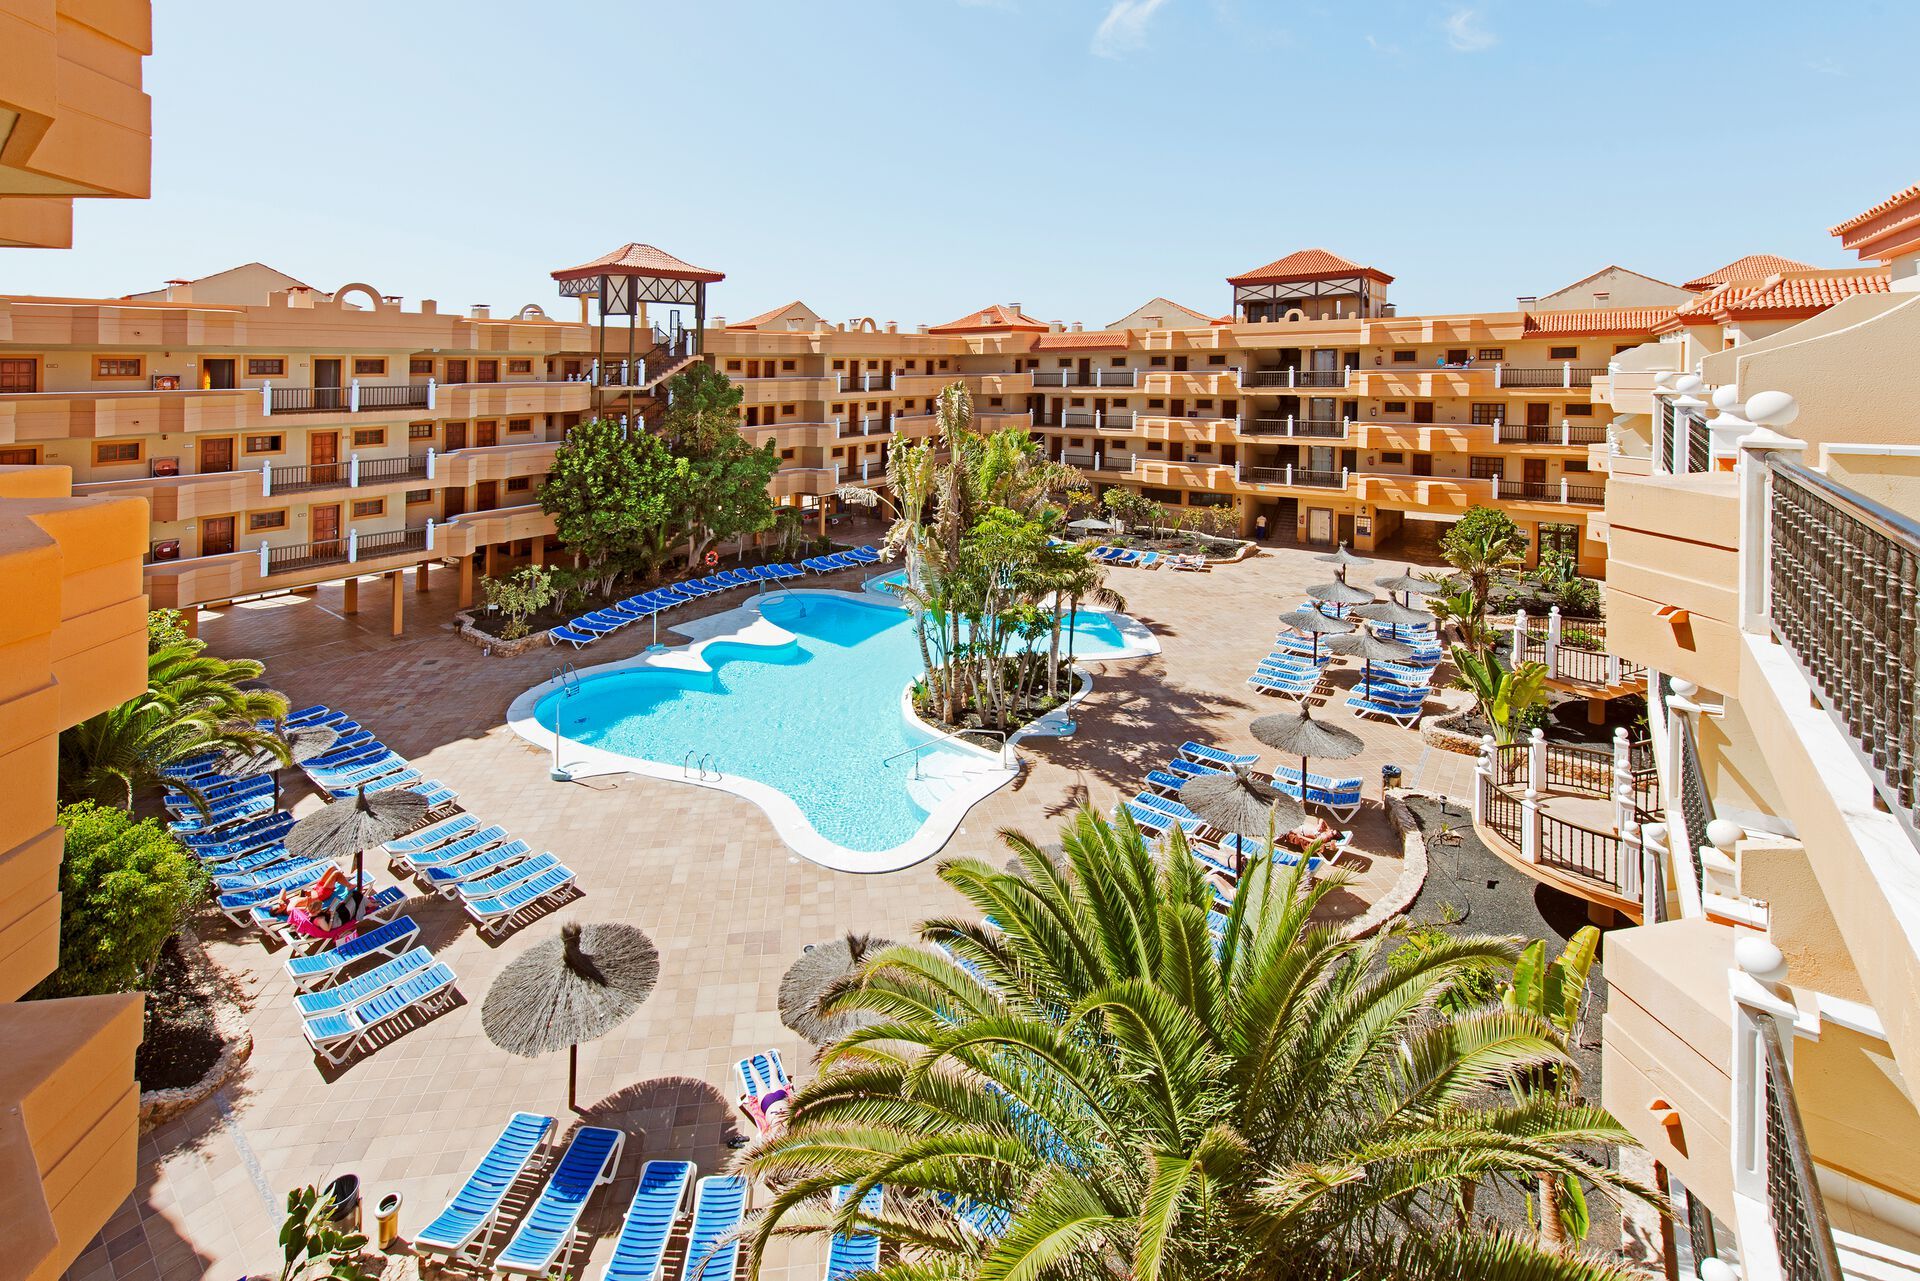 Canaries - Fuerteventura - Espagne - Suite-Hôtel Elba Castillo San Jorge & Antigua 3*